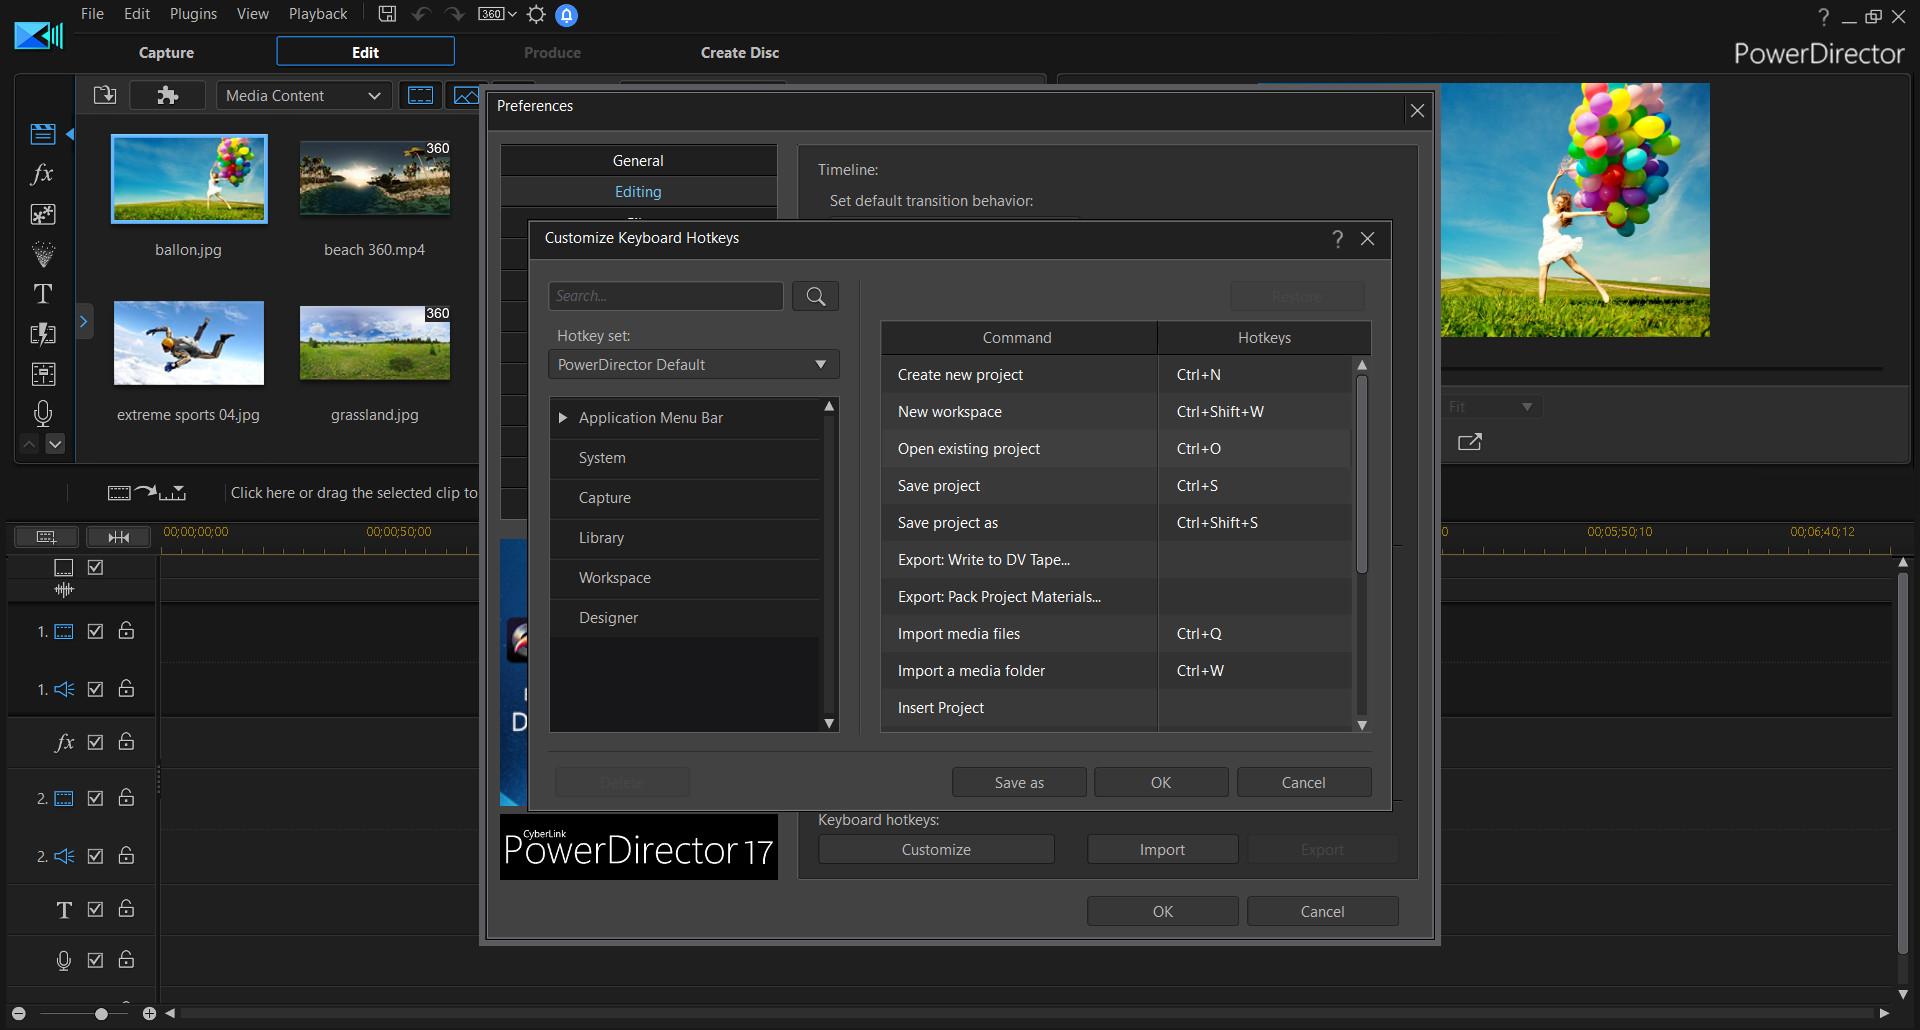 PowerDirector 17 Ultimate - Video editing, Video editor, making videos screenshot